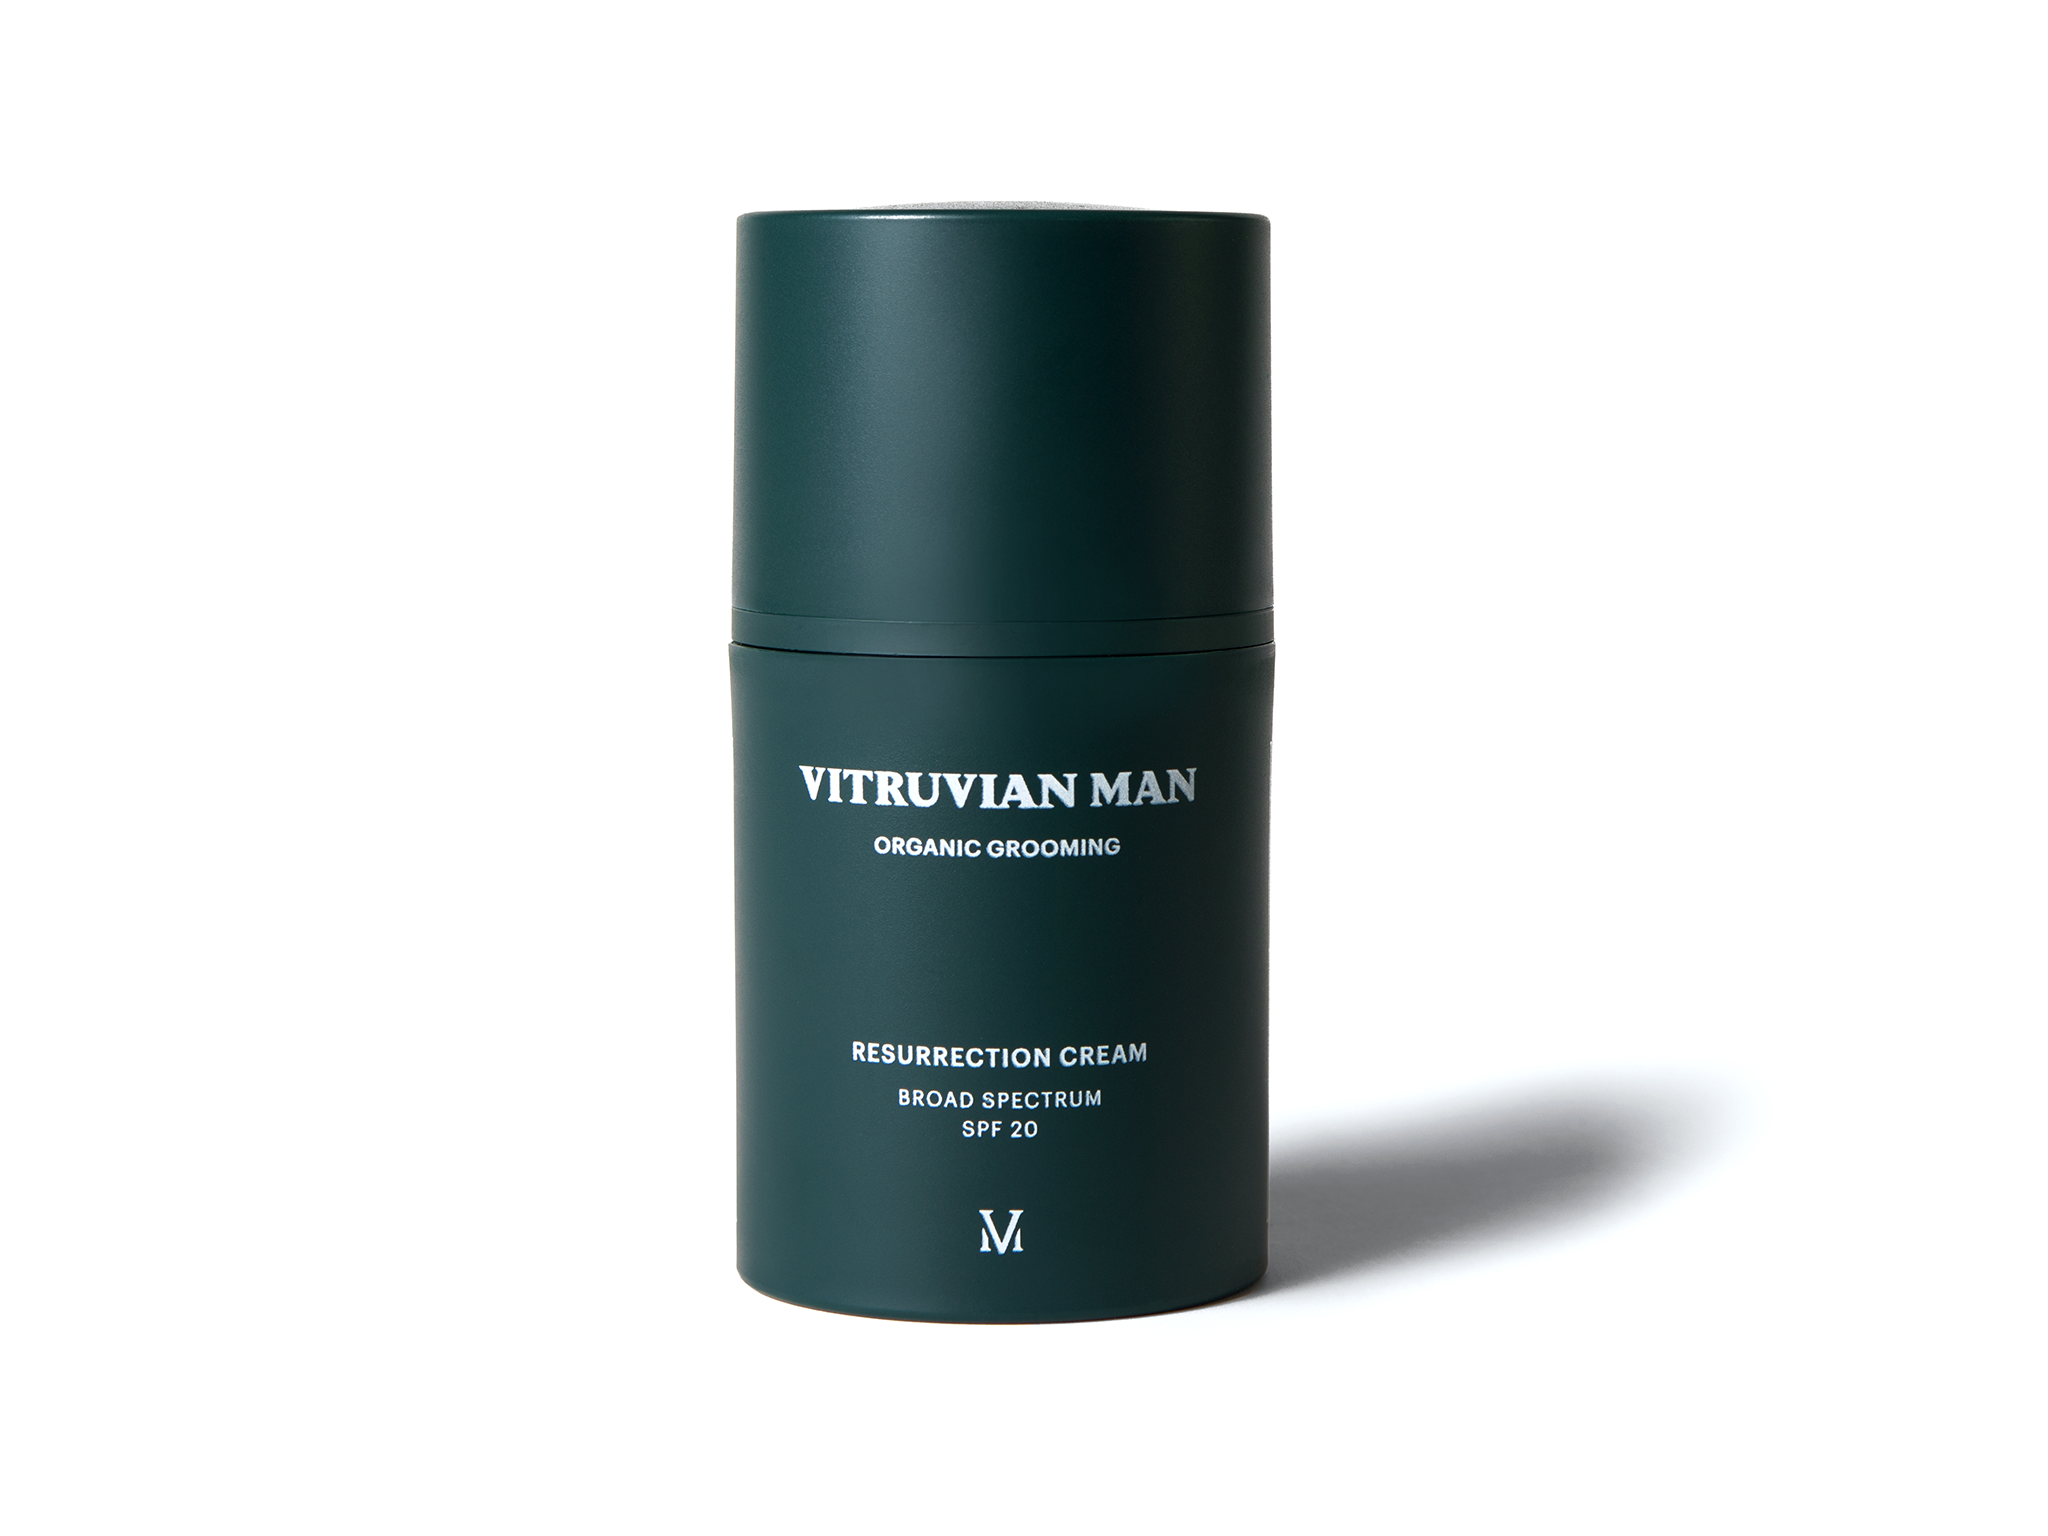 Vitruvian man organic grooming resurrection cream SPF20